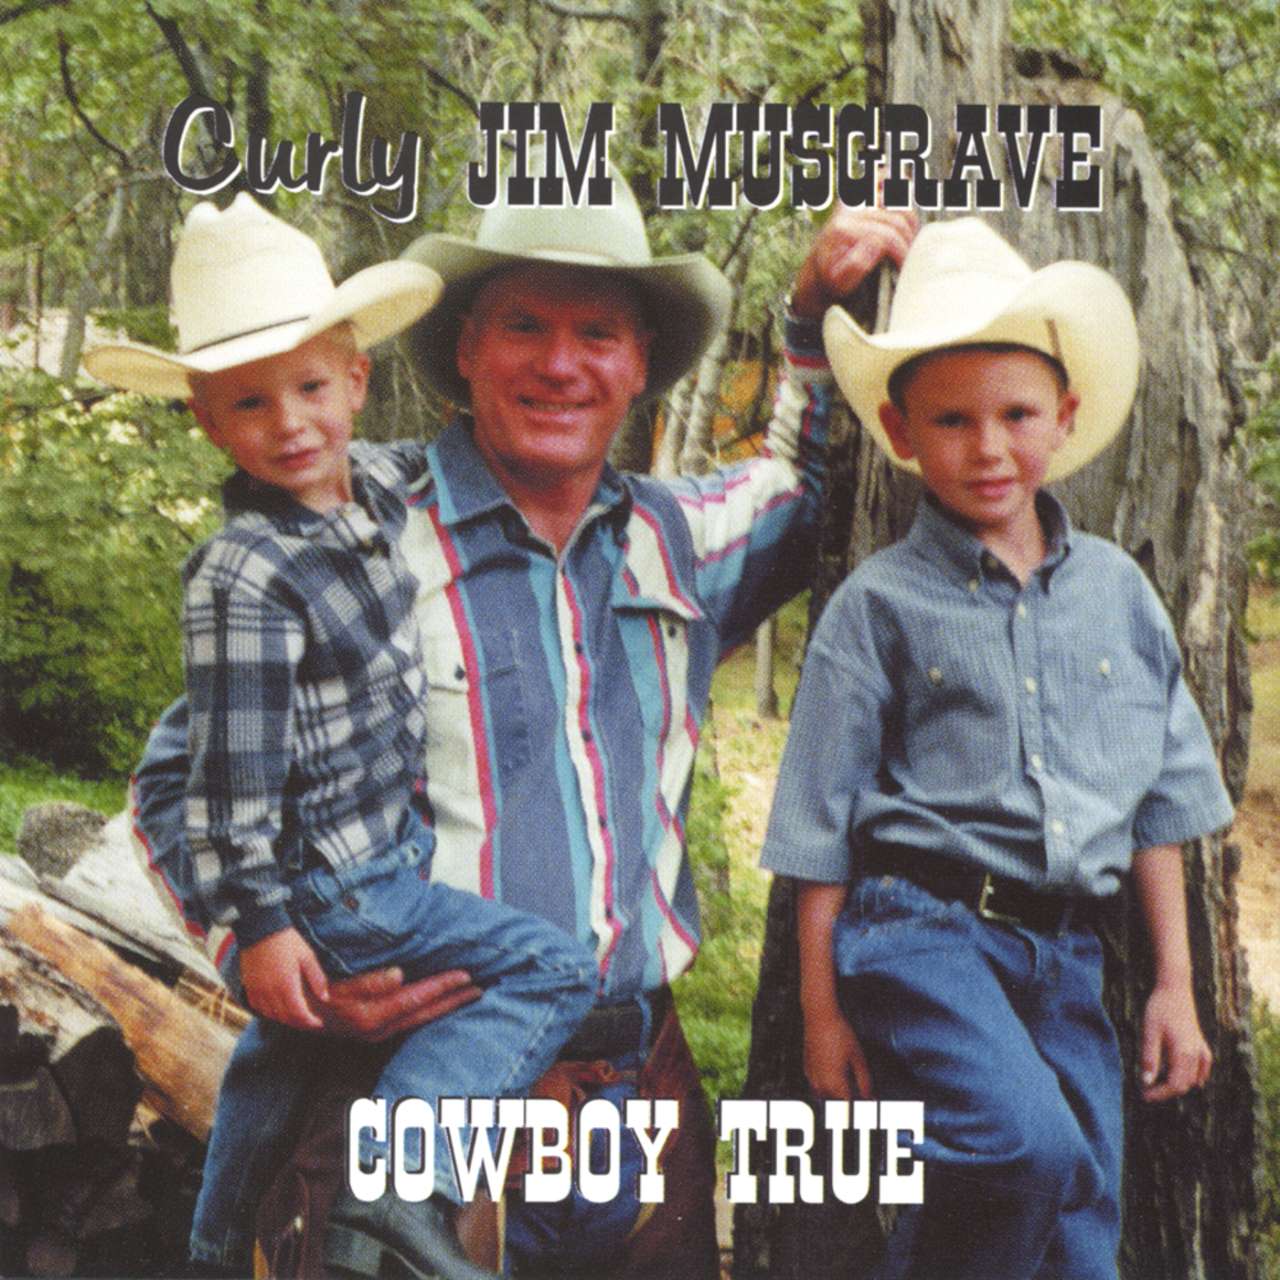 Curly Jim Musgrave - Cowboy True cover album